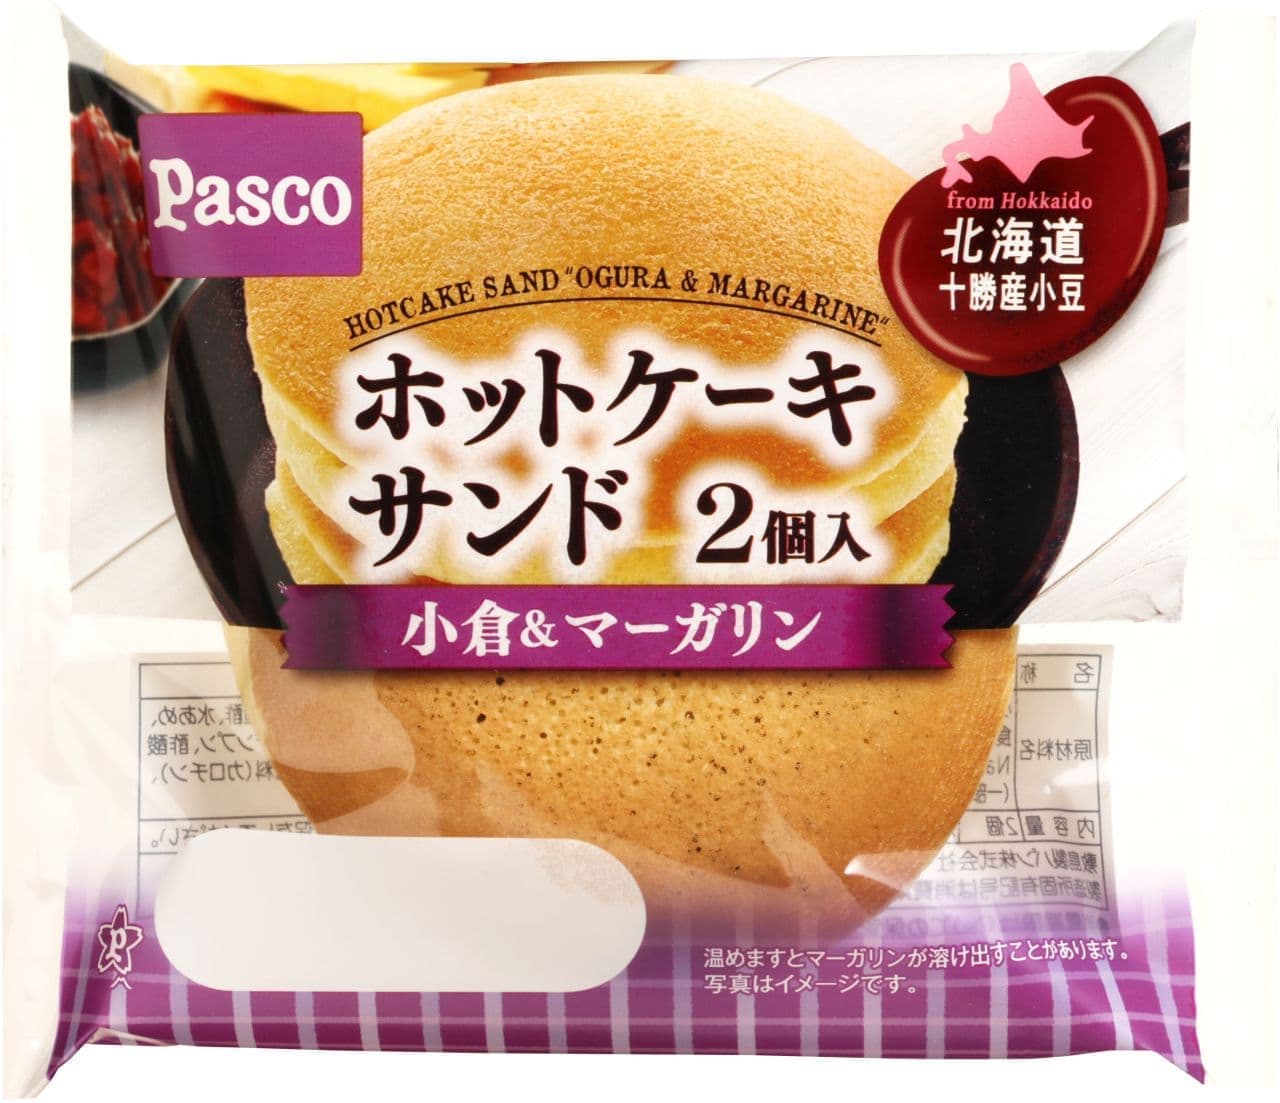 Pasco "Hotcake Sandwich Kokura & Margarine 2 Pieces"